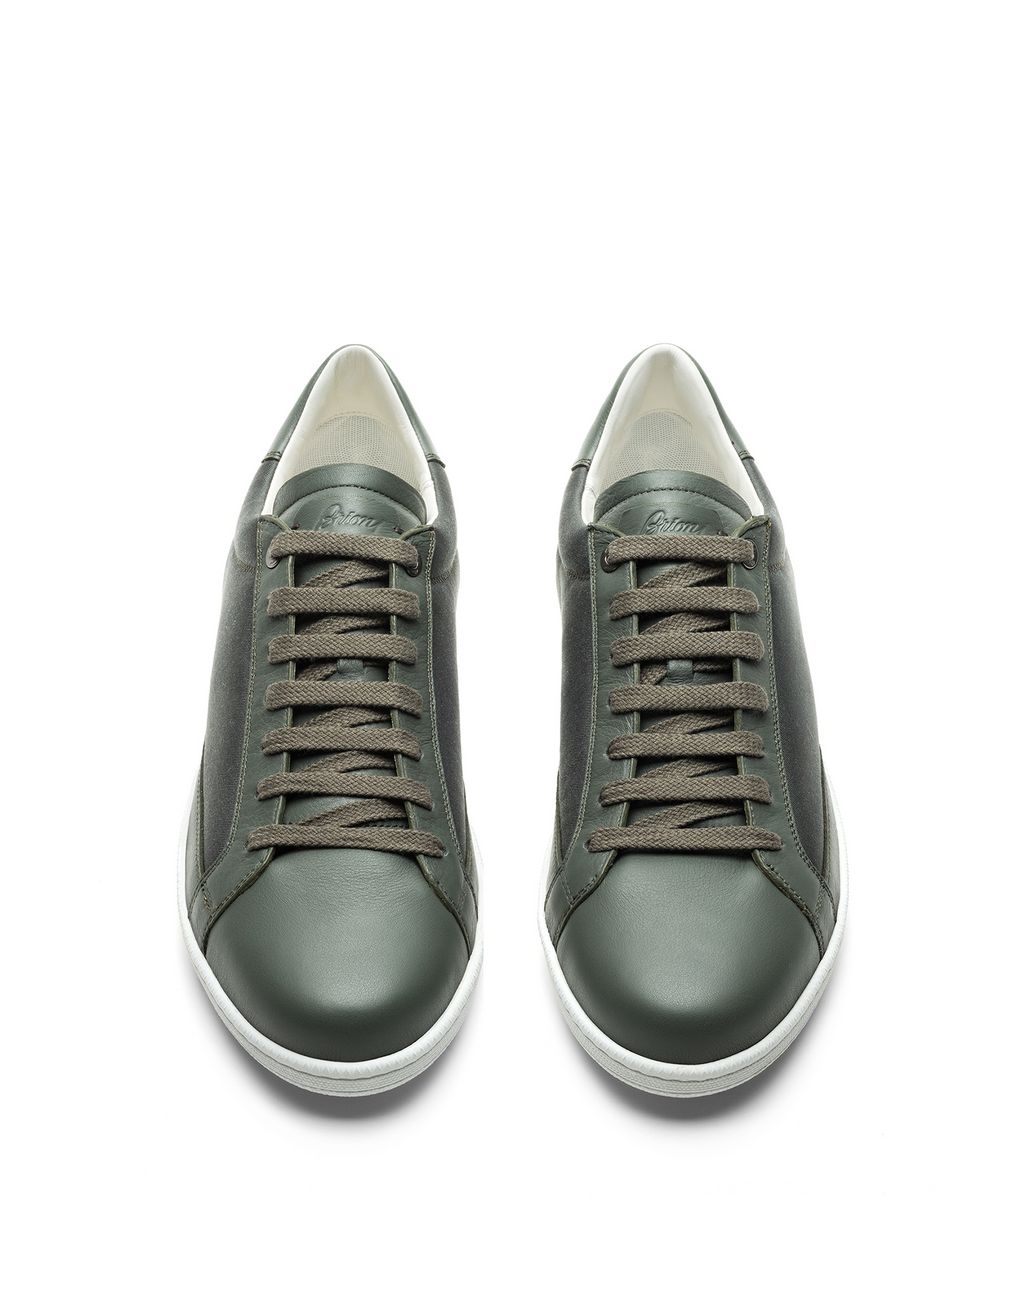 Brioni Men's Sneakers | Brioni Official Online Store